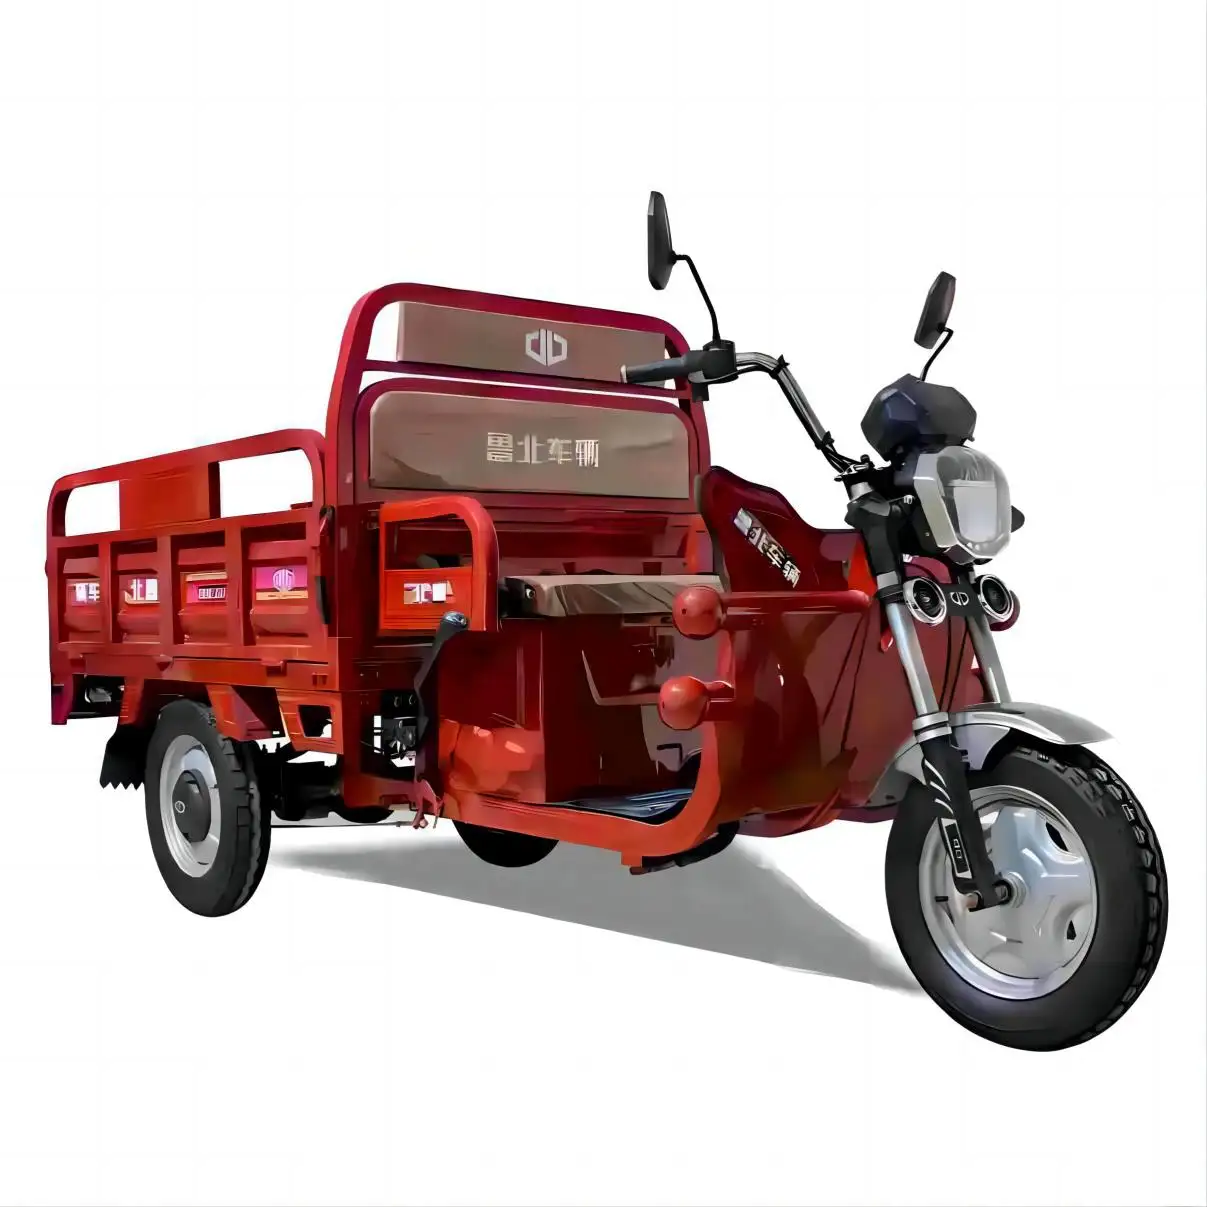 Lubei 차량 제조 업체 OEM/ODM 1500W 1800W 트럭화물 트라이크 강력한 등반 능력 세 바퀴 전기화물 세발 자전거